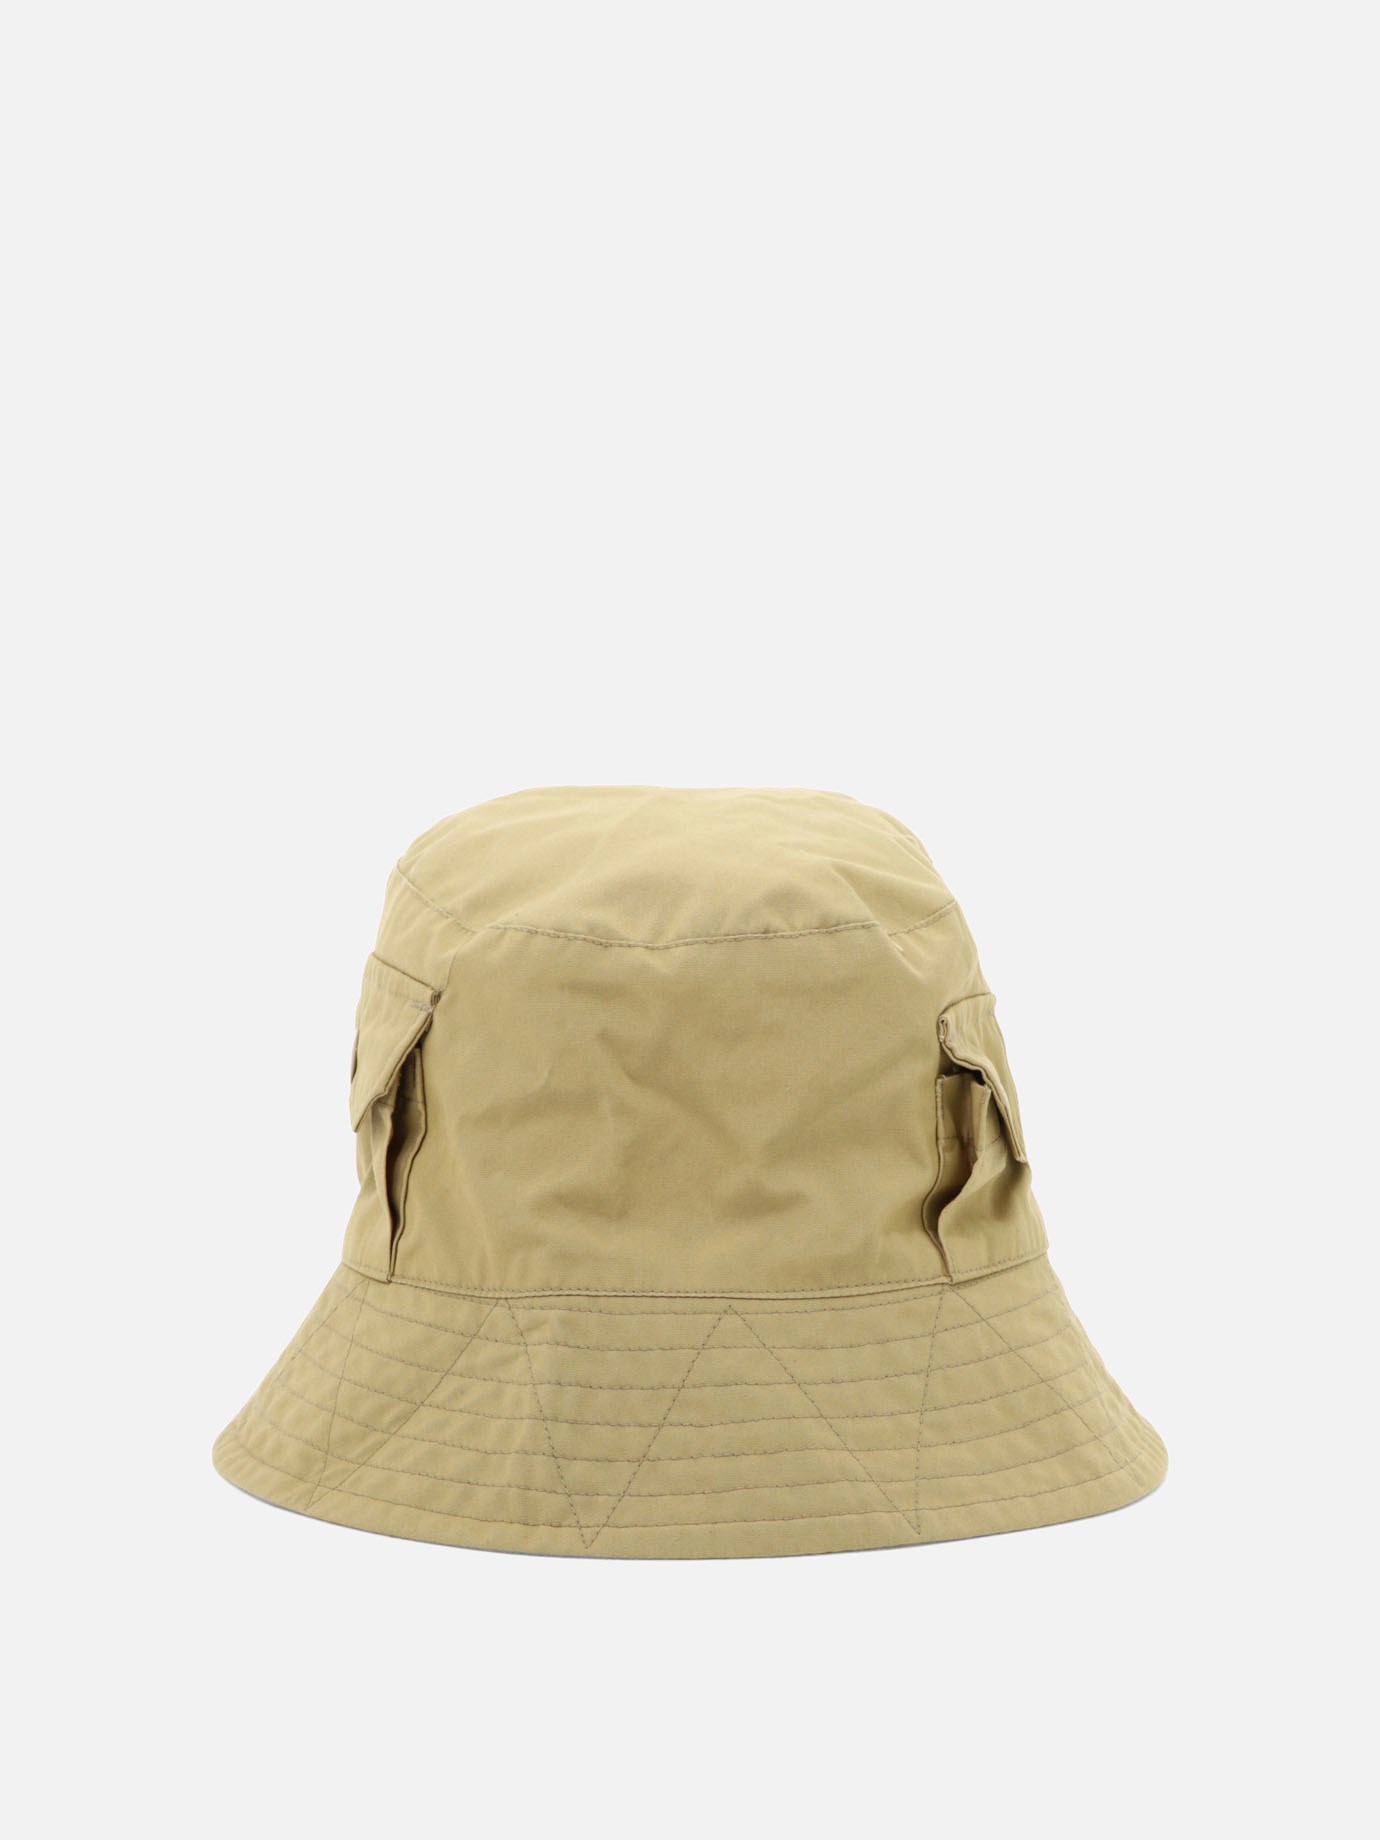  Explorer  bucket hatby Engineered Garments - 3